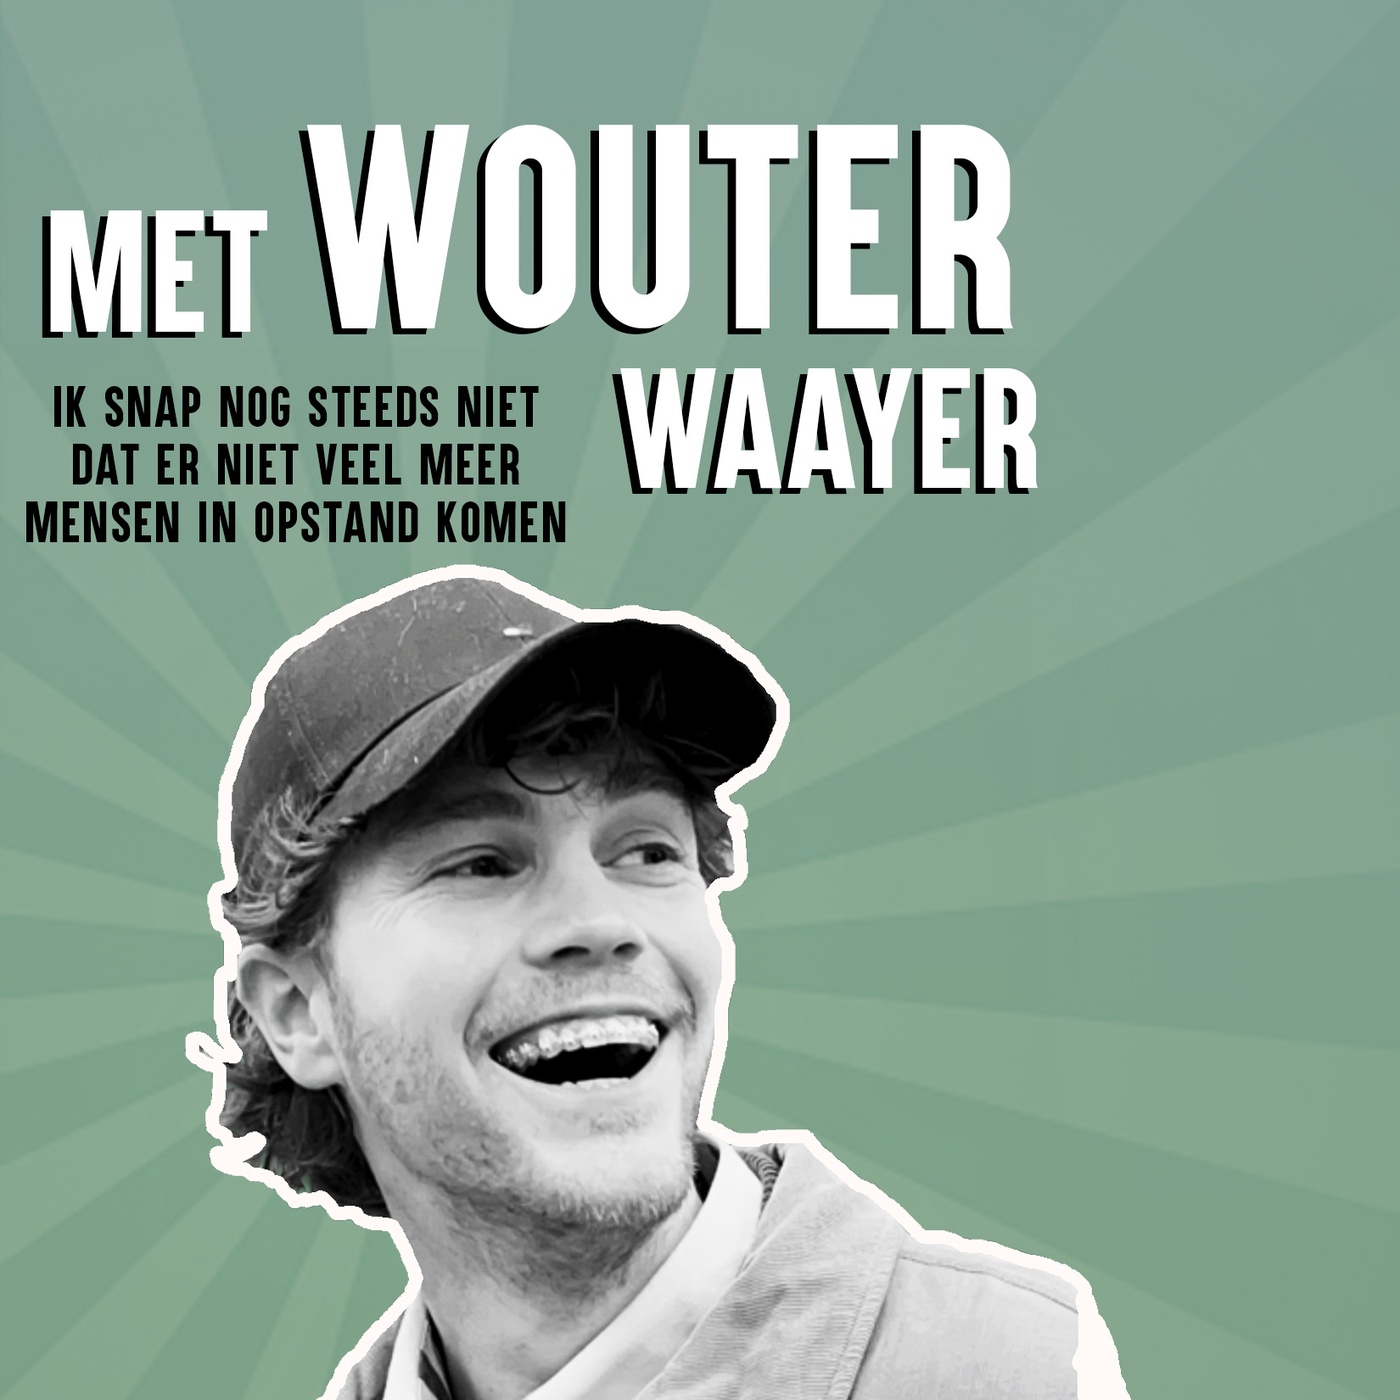 Vegan boerenzoon Wouter Waayer (Interview)